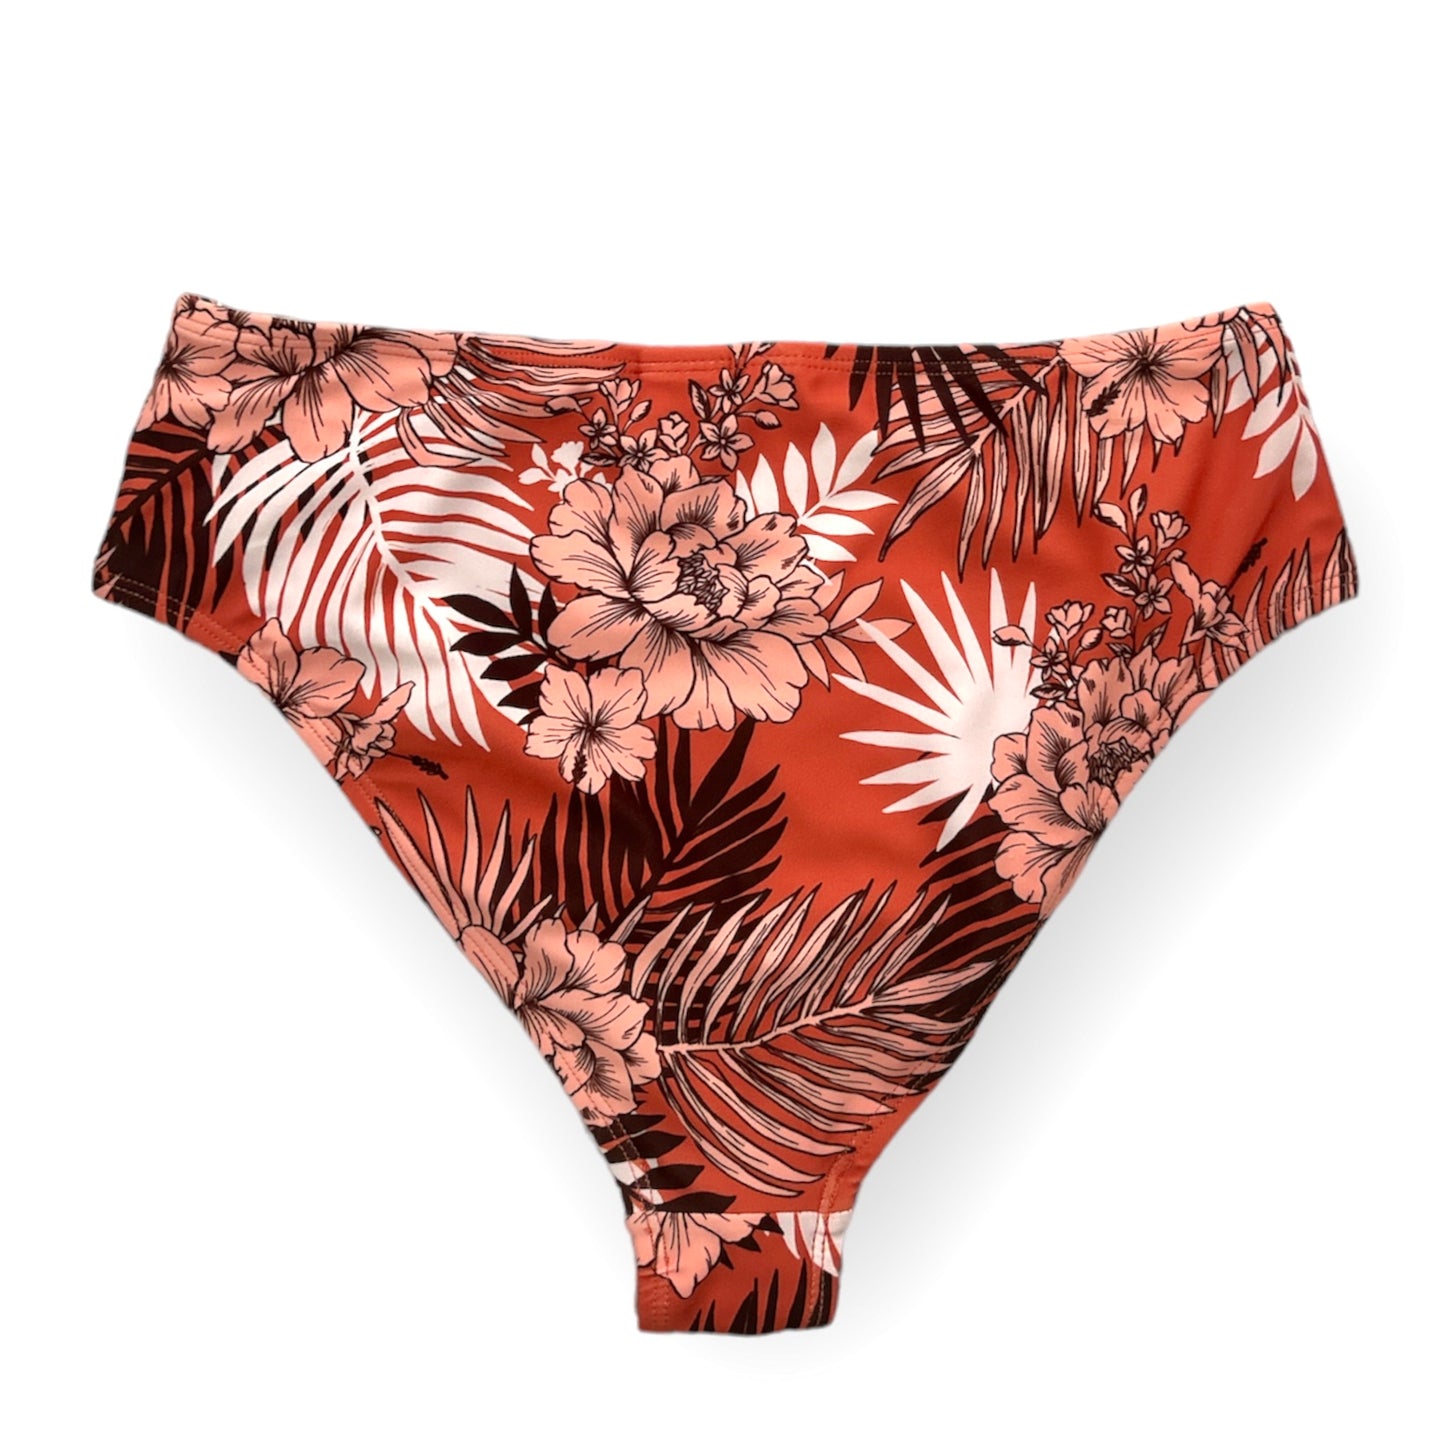 Brown/Floral Print Bikini Bottom Size S Women's Swimwear